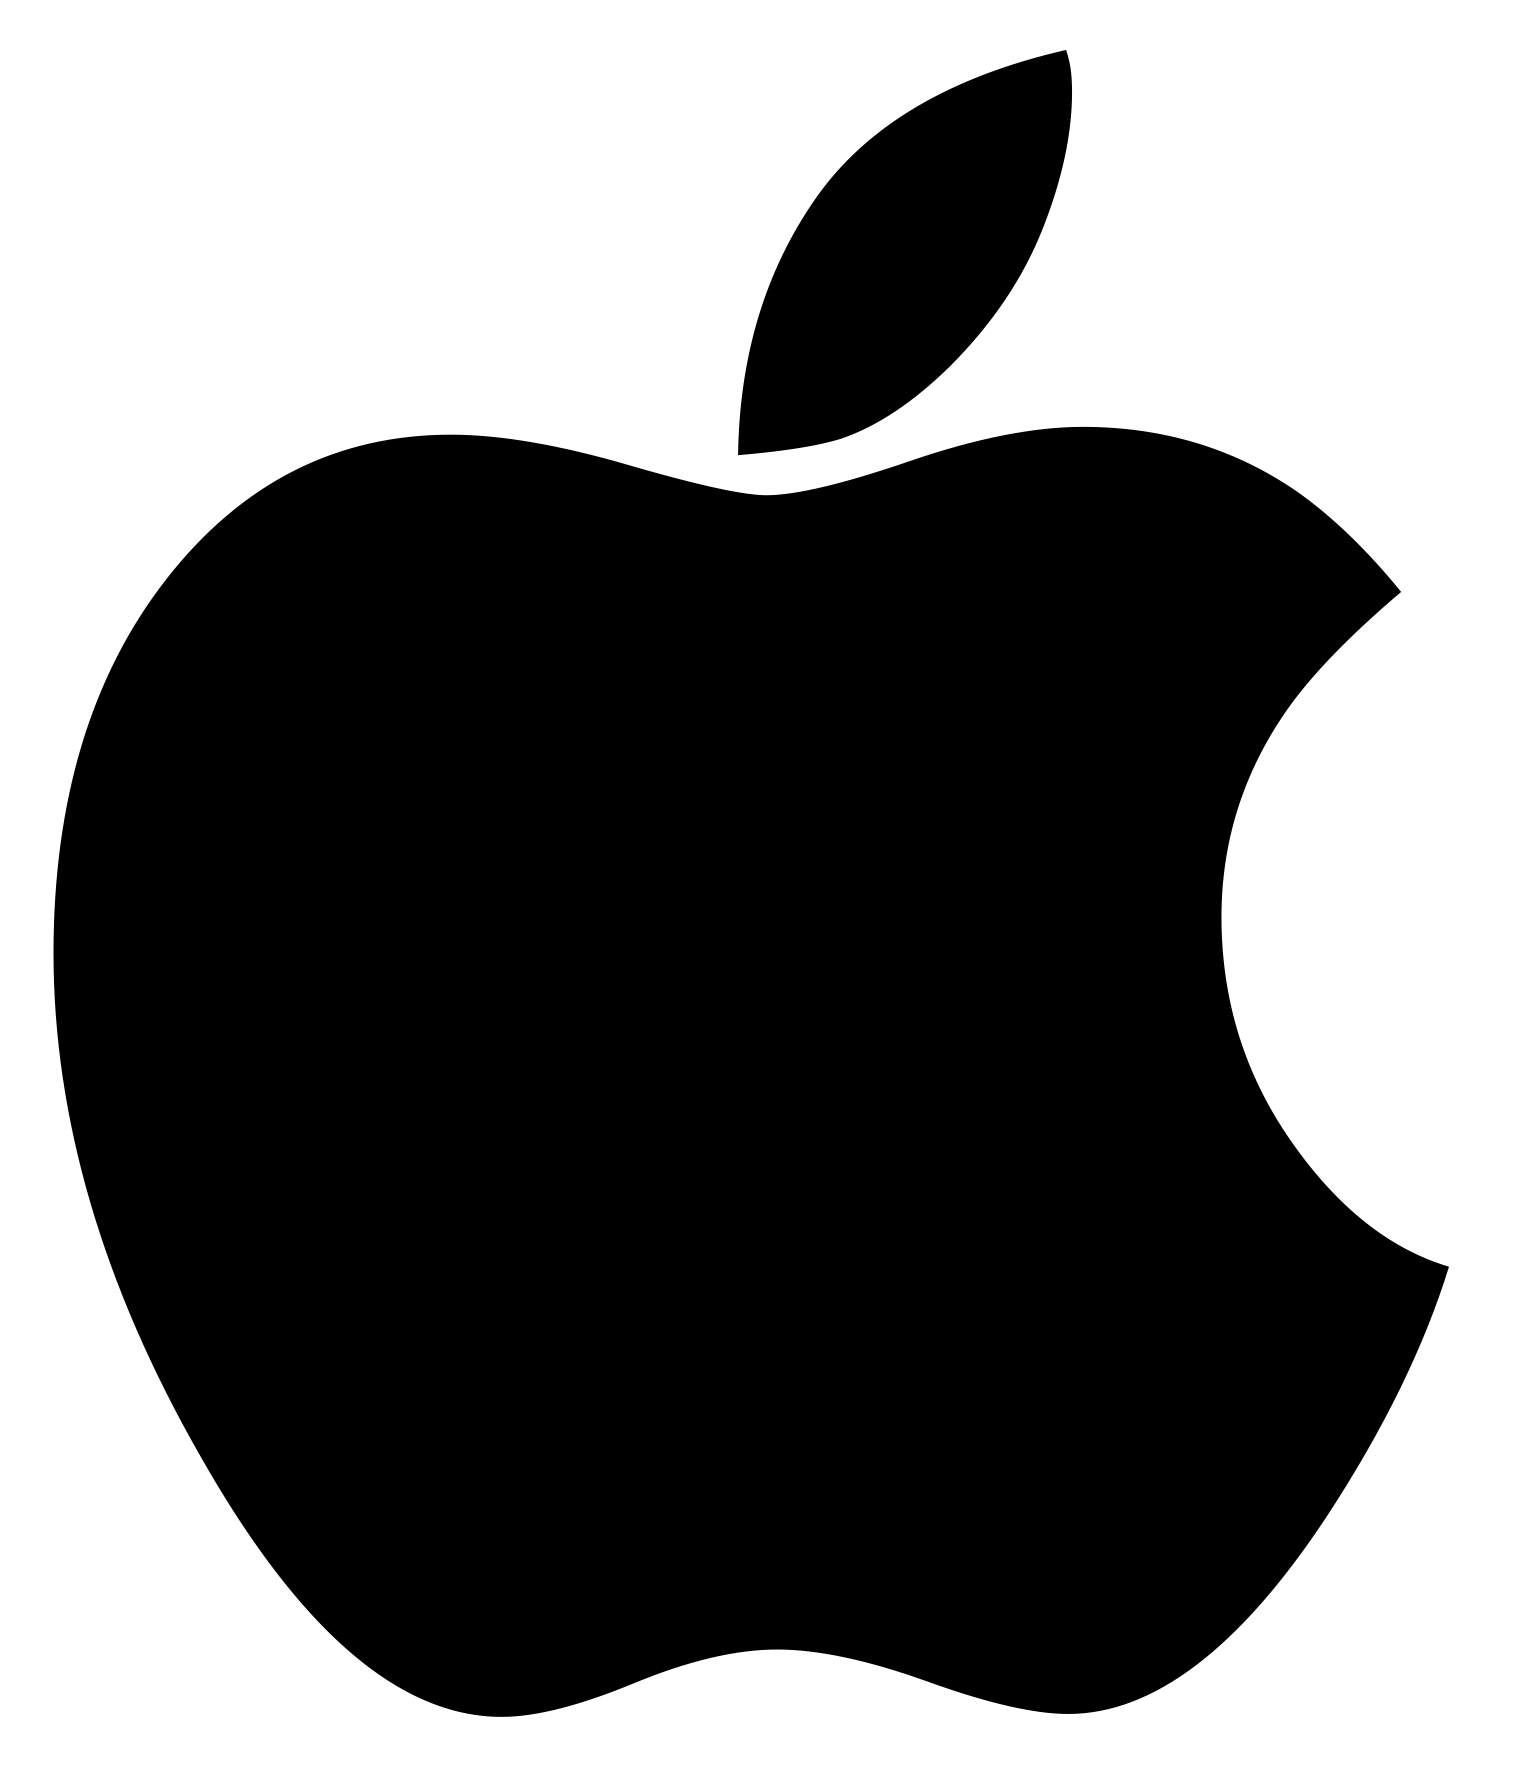 Apple-logo-black-and-white-1